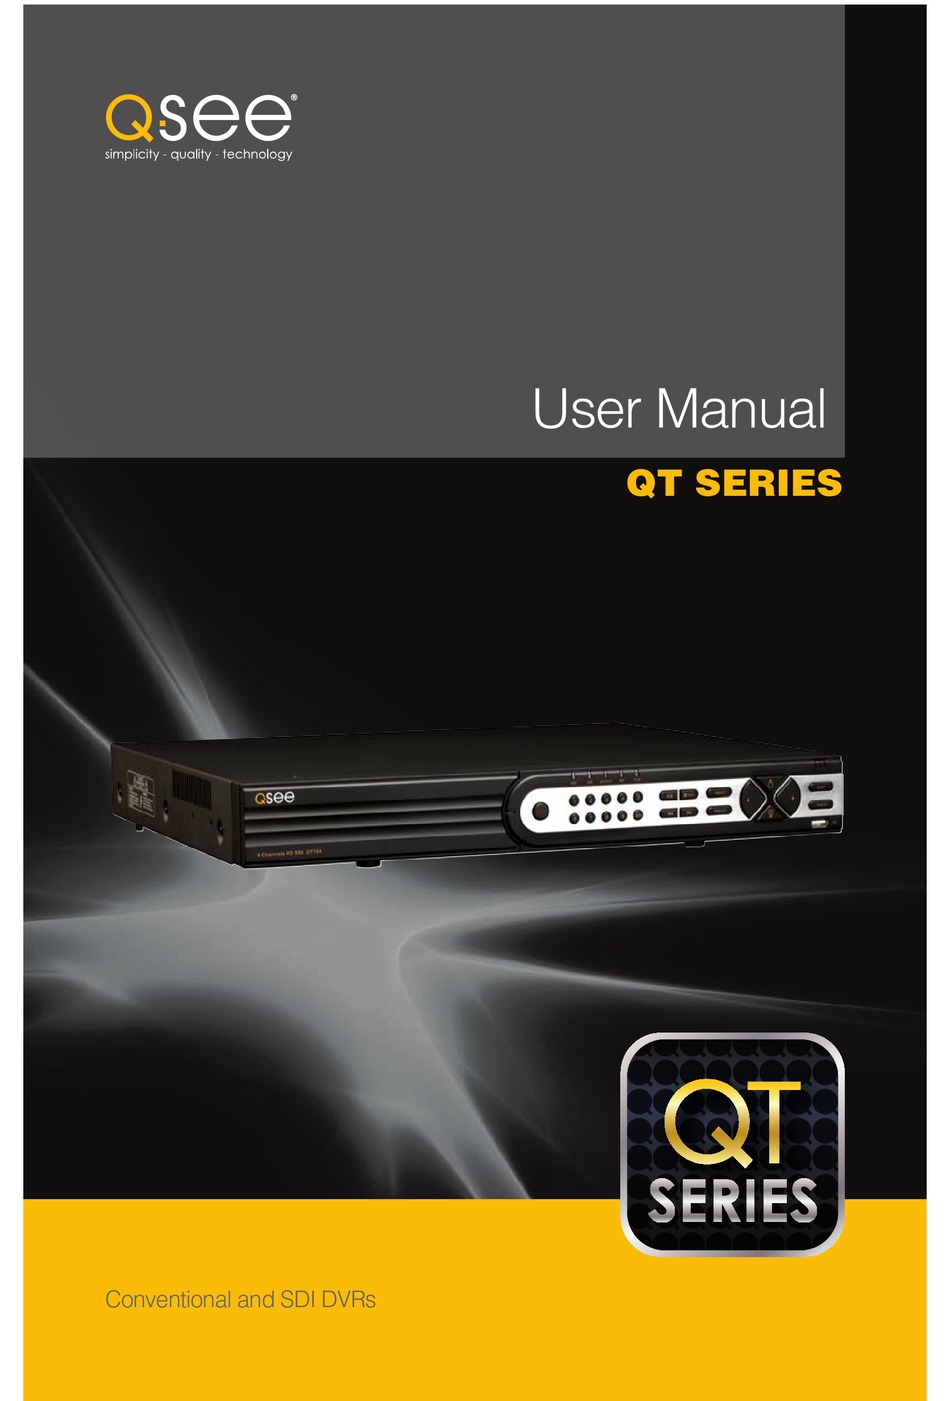 QSEE QT SERIES USER MANUAL Pdf Download | ManualsLib